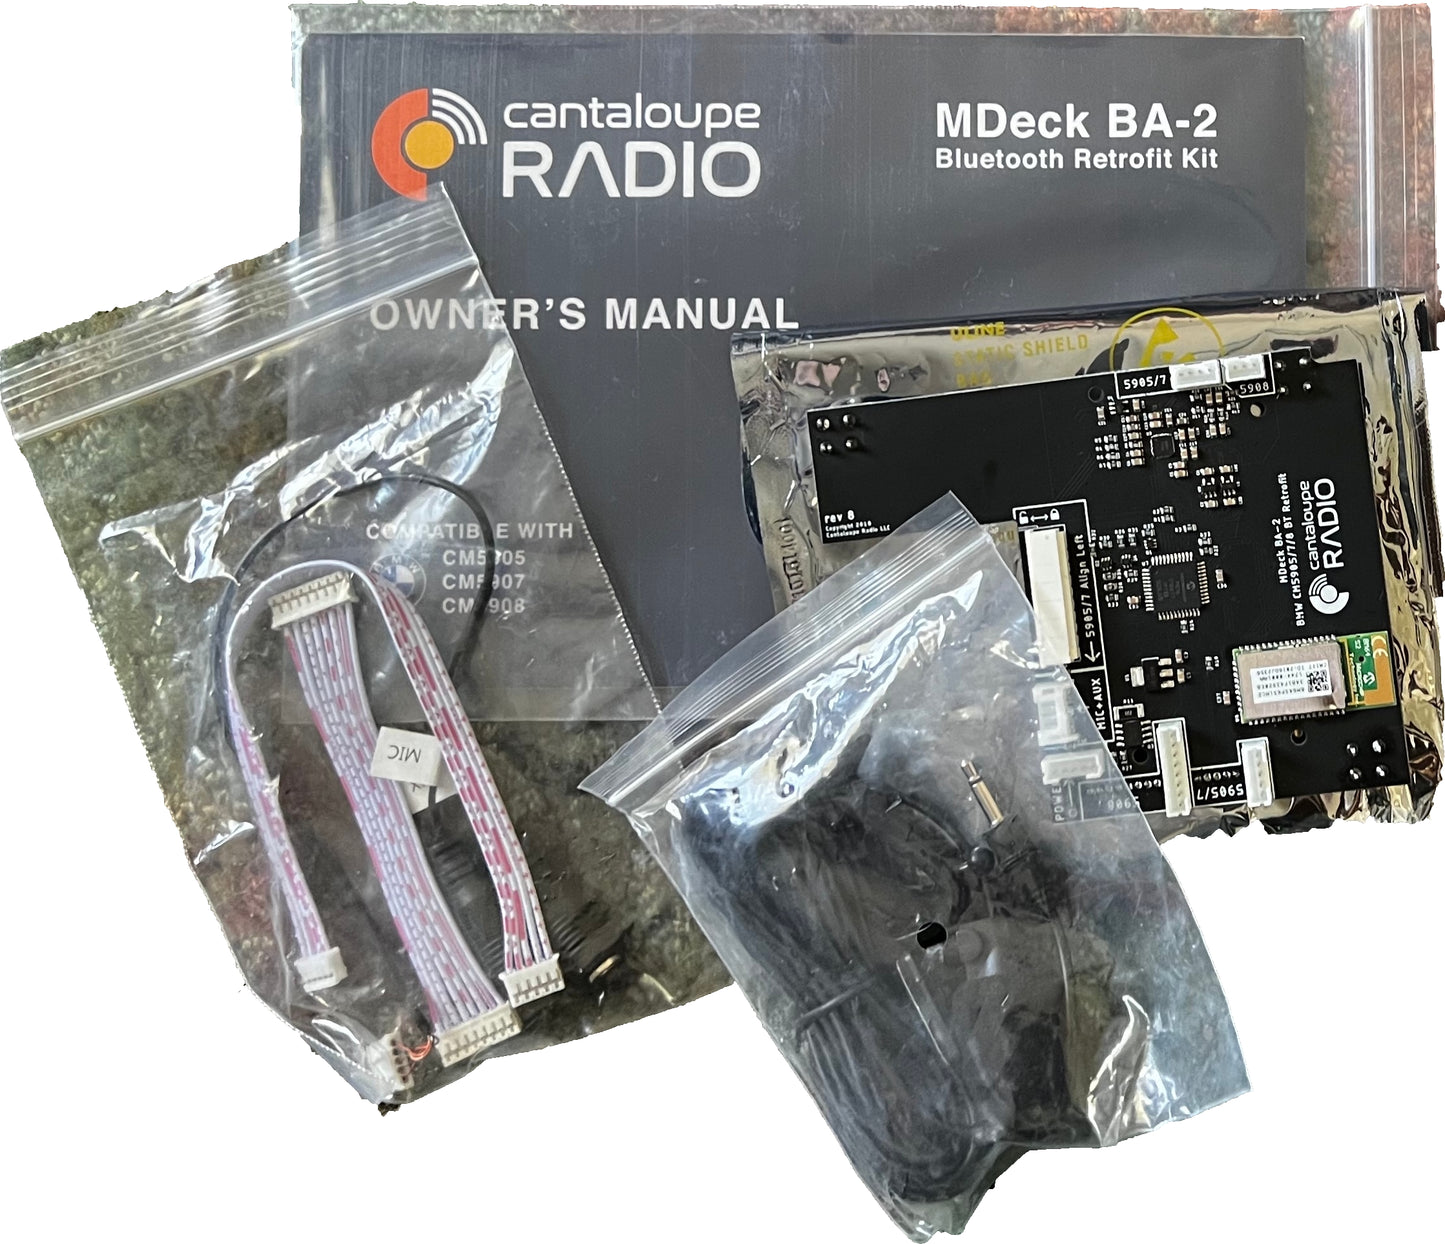 Kit Bluetooth BA2 para CM5905, CM5907 y CM5908